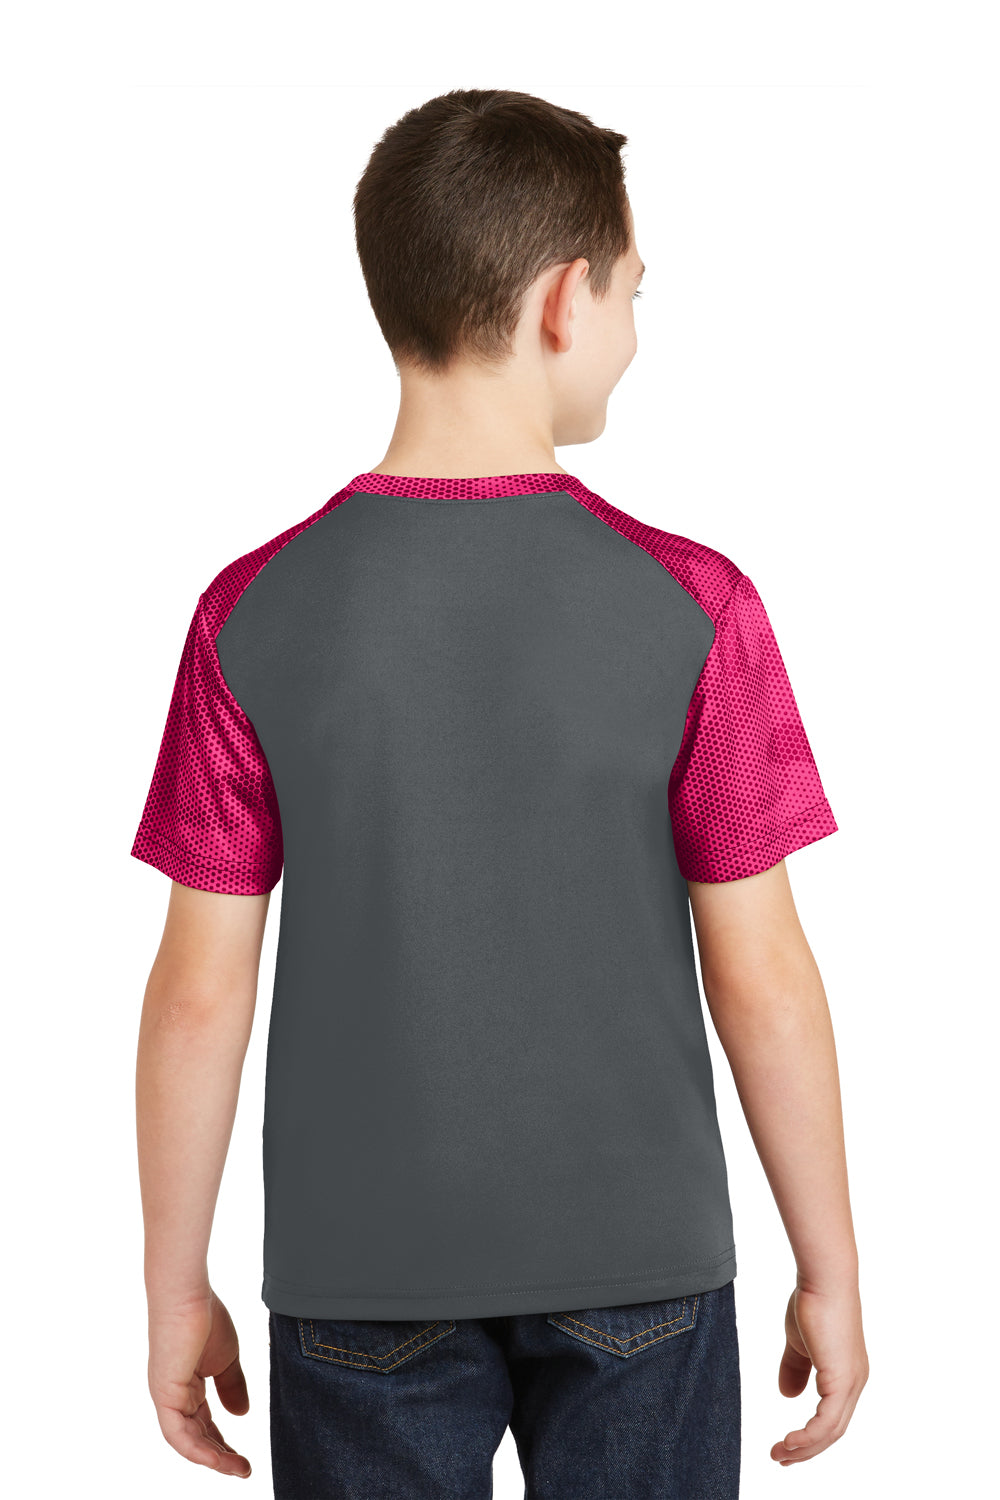 Sport-Tek YST371 Youth CamoHex Moisture Wicking Short Sleeve Crewneck T-Shirt Iron Grey/Fuchsia Pink Back